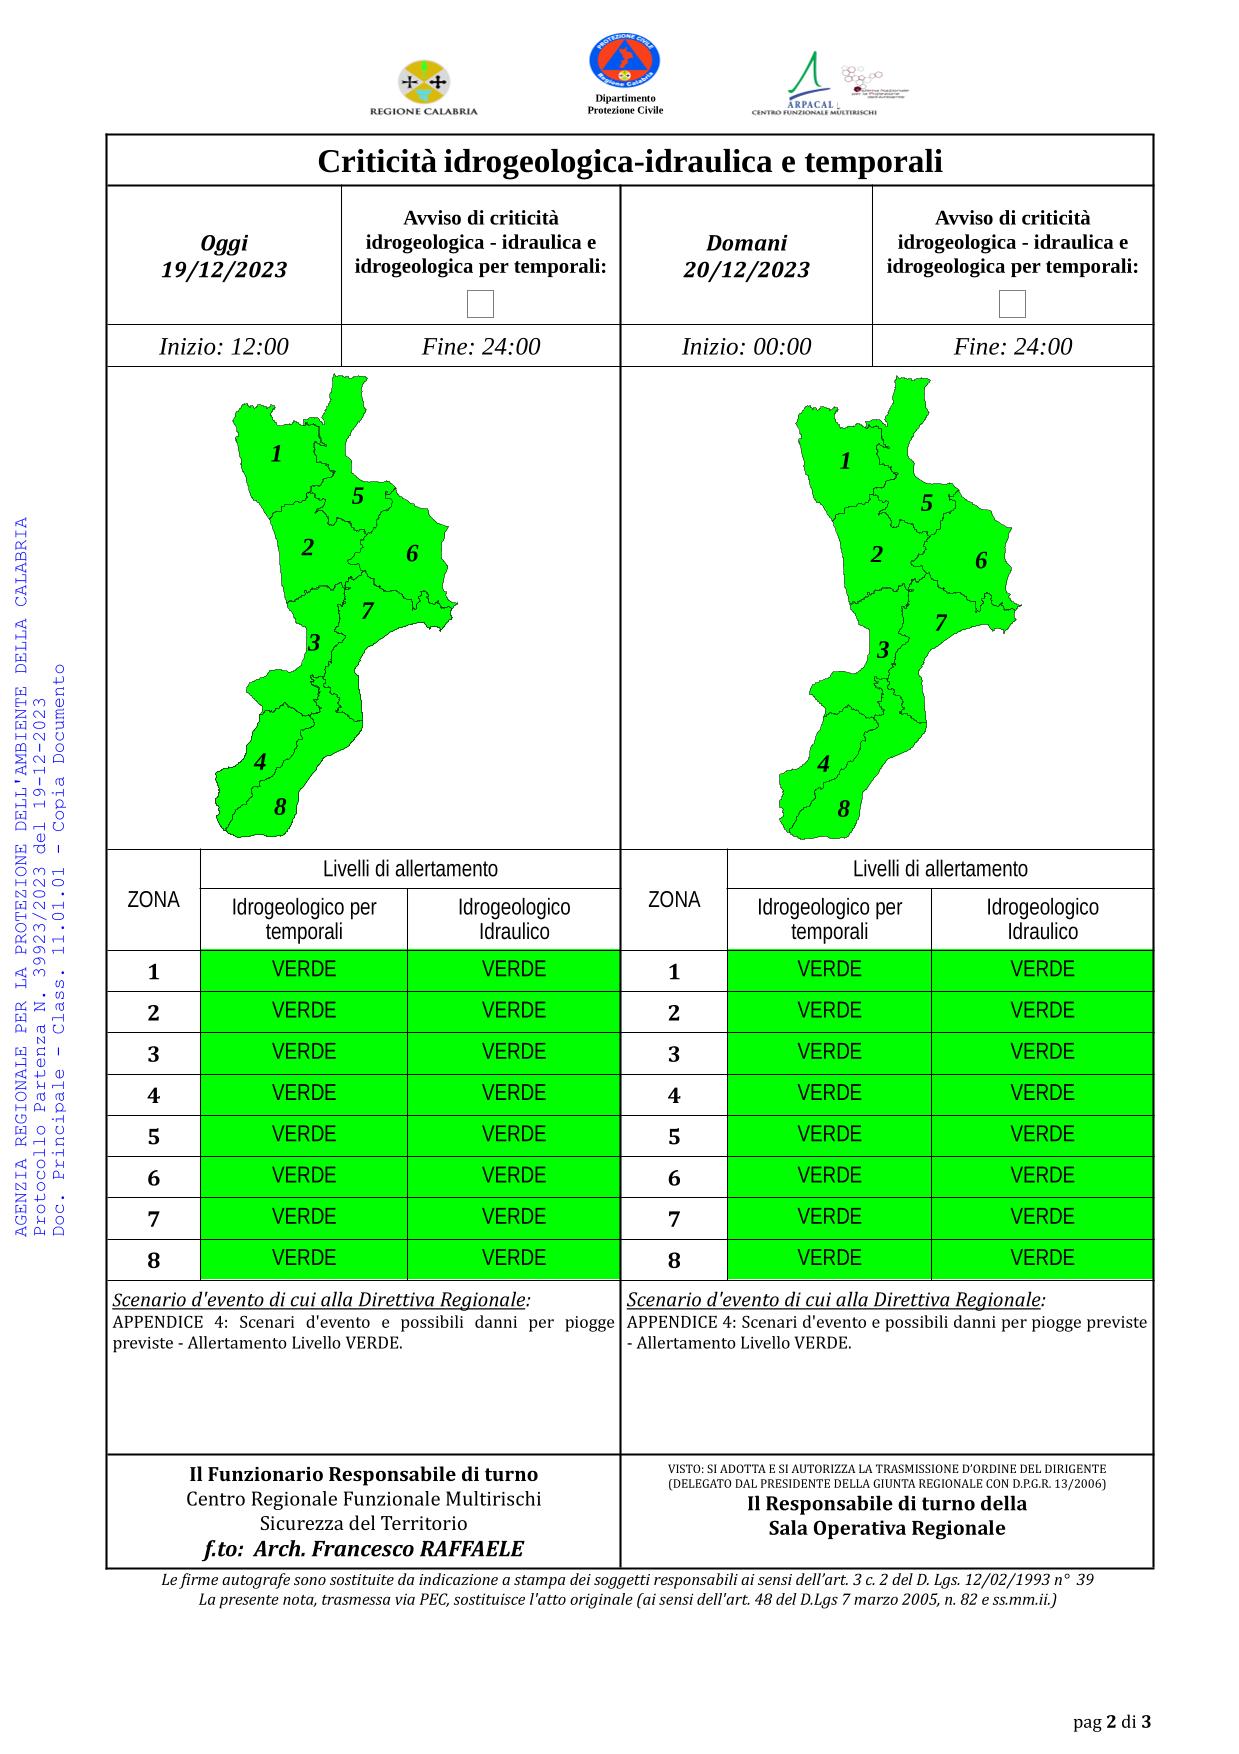 Criticità idrogeologica-idraulica e temporali in Calabria 19-12-2023